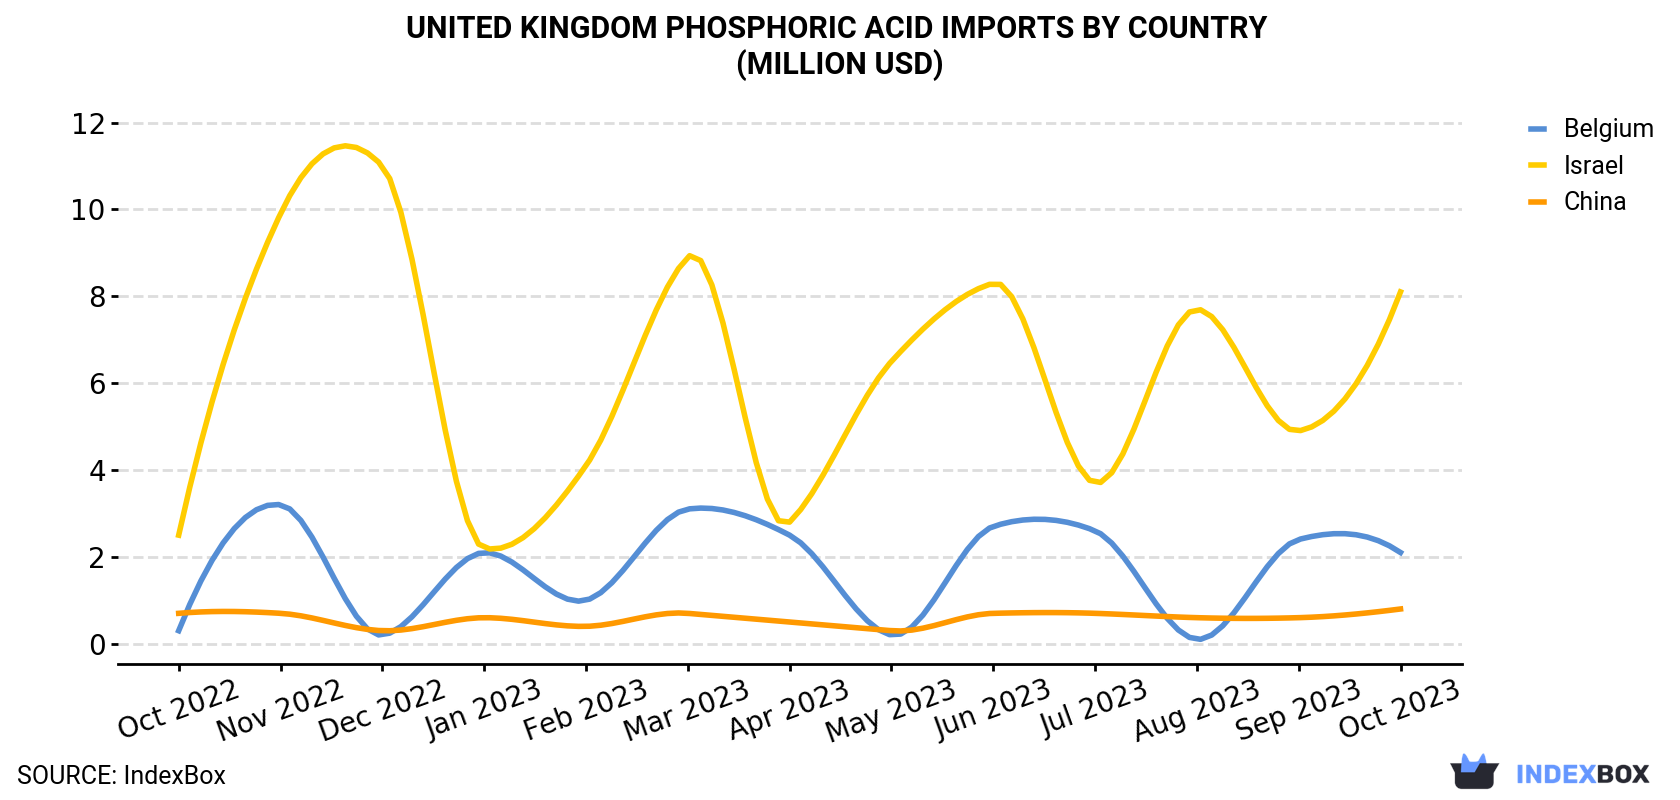 United Kingdom Phosphoric Acid Imports By Country (Million USD)